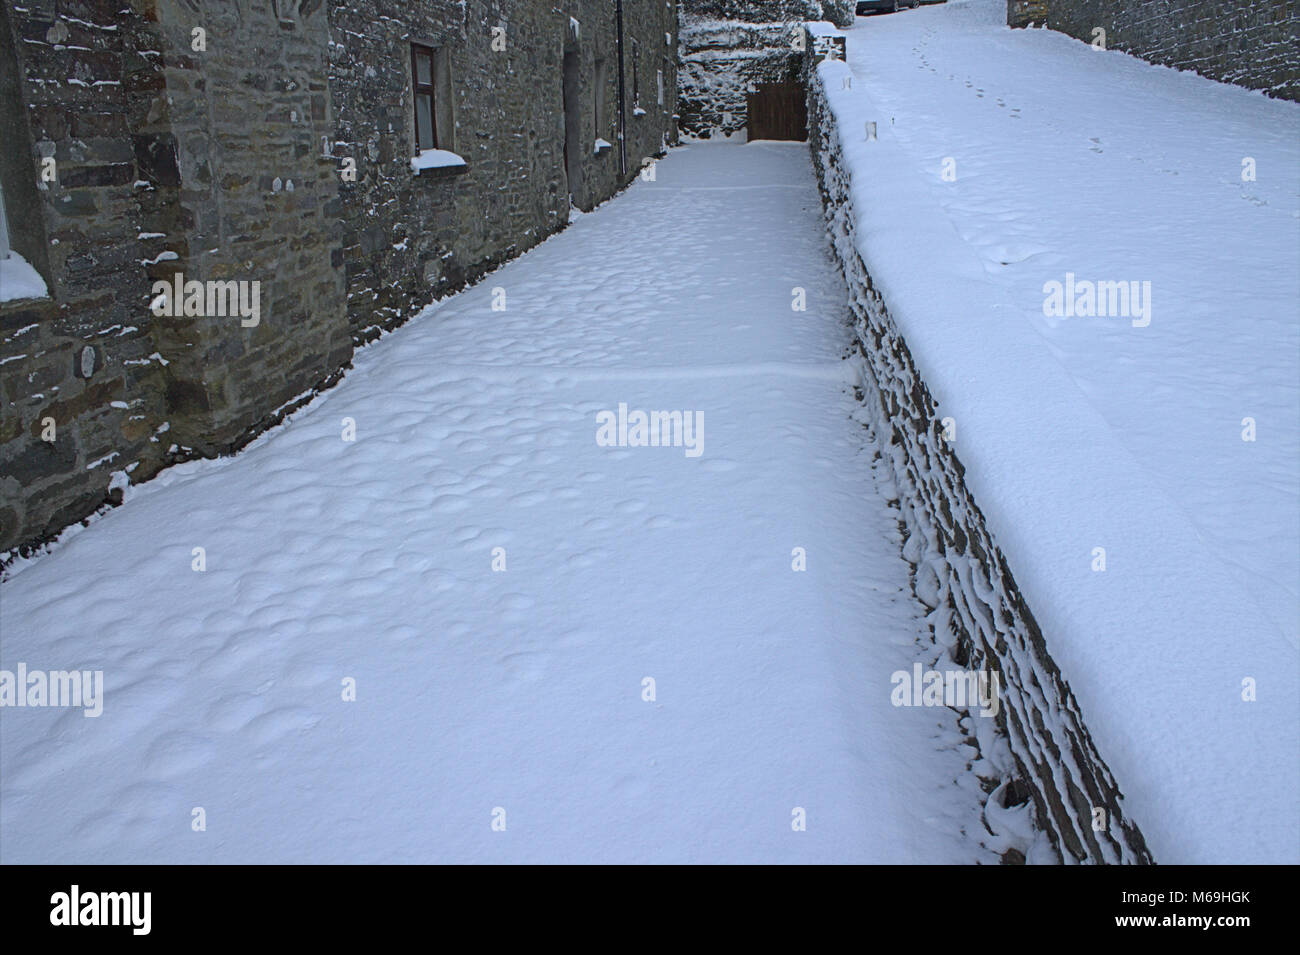 Pristine undisturbed fresh snow on a sidewalk or footpath after overnight snowfall. Stock Photo